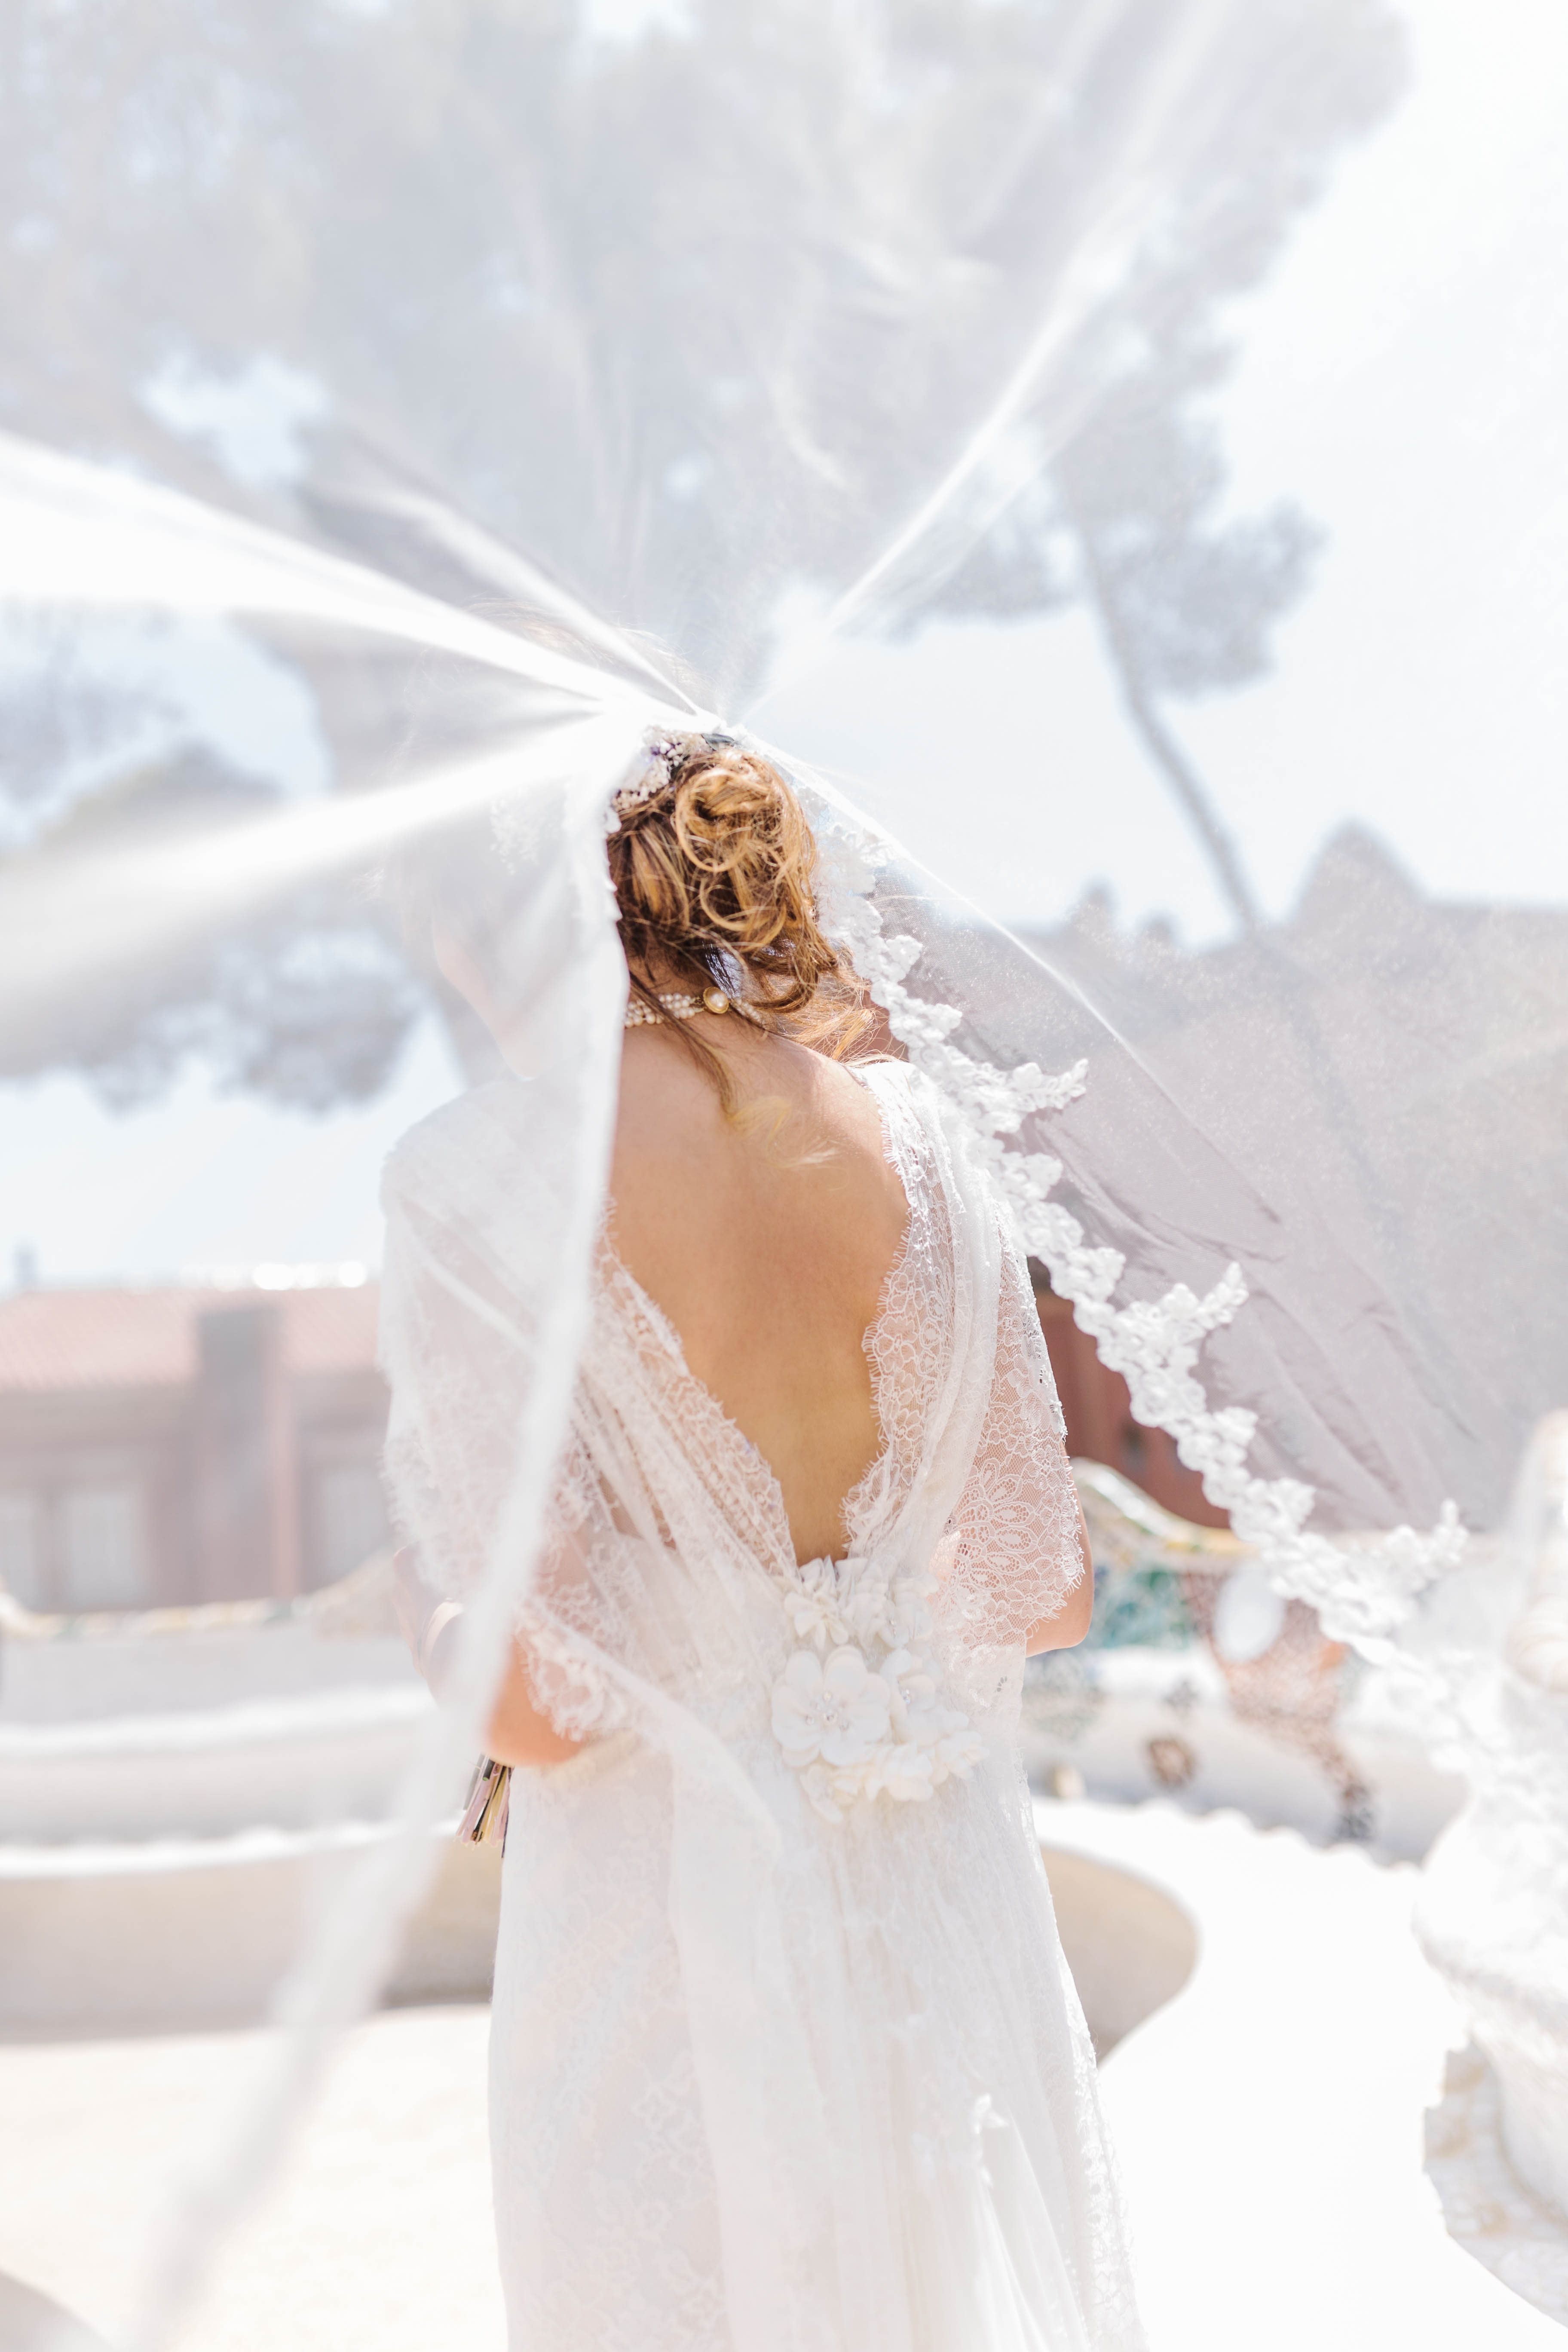 Romantic close up portrait | Fin Art Photographer | Lena Karelova Photography | Barcelona Film Wedding Photographer